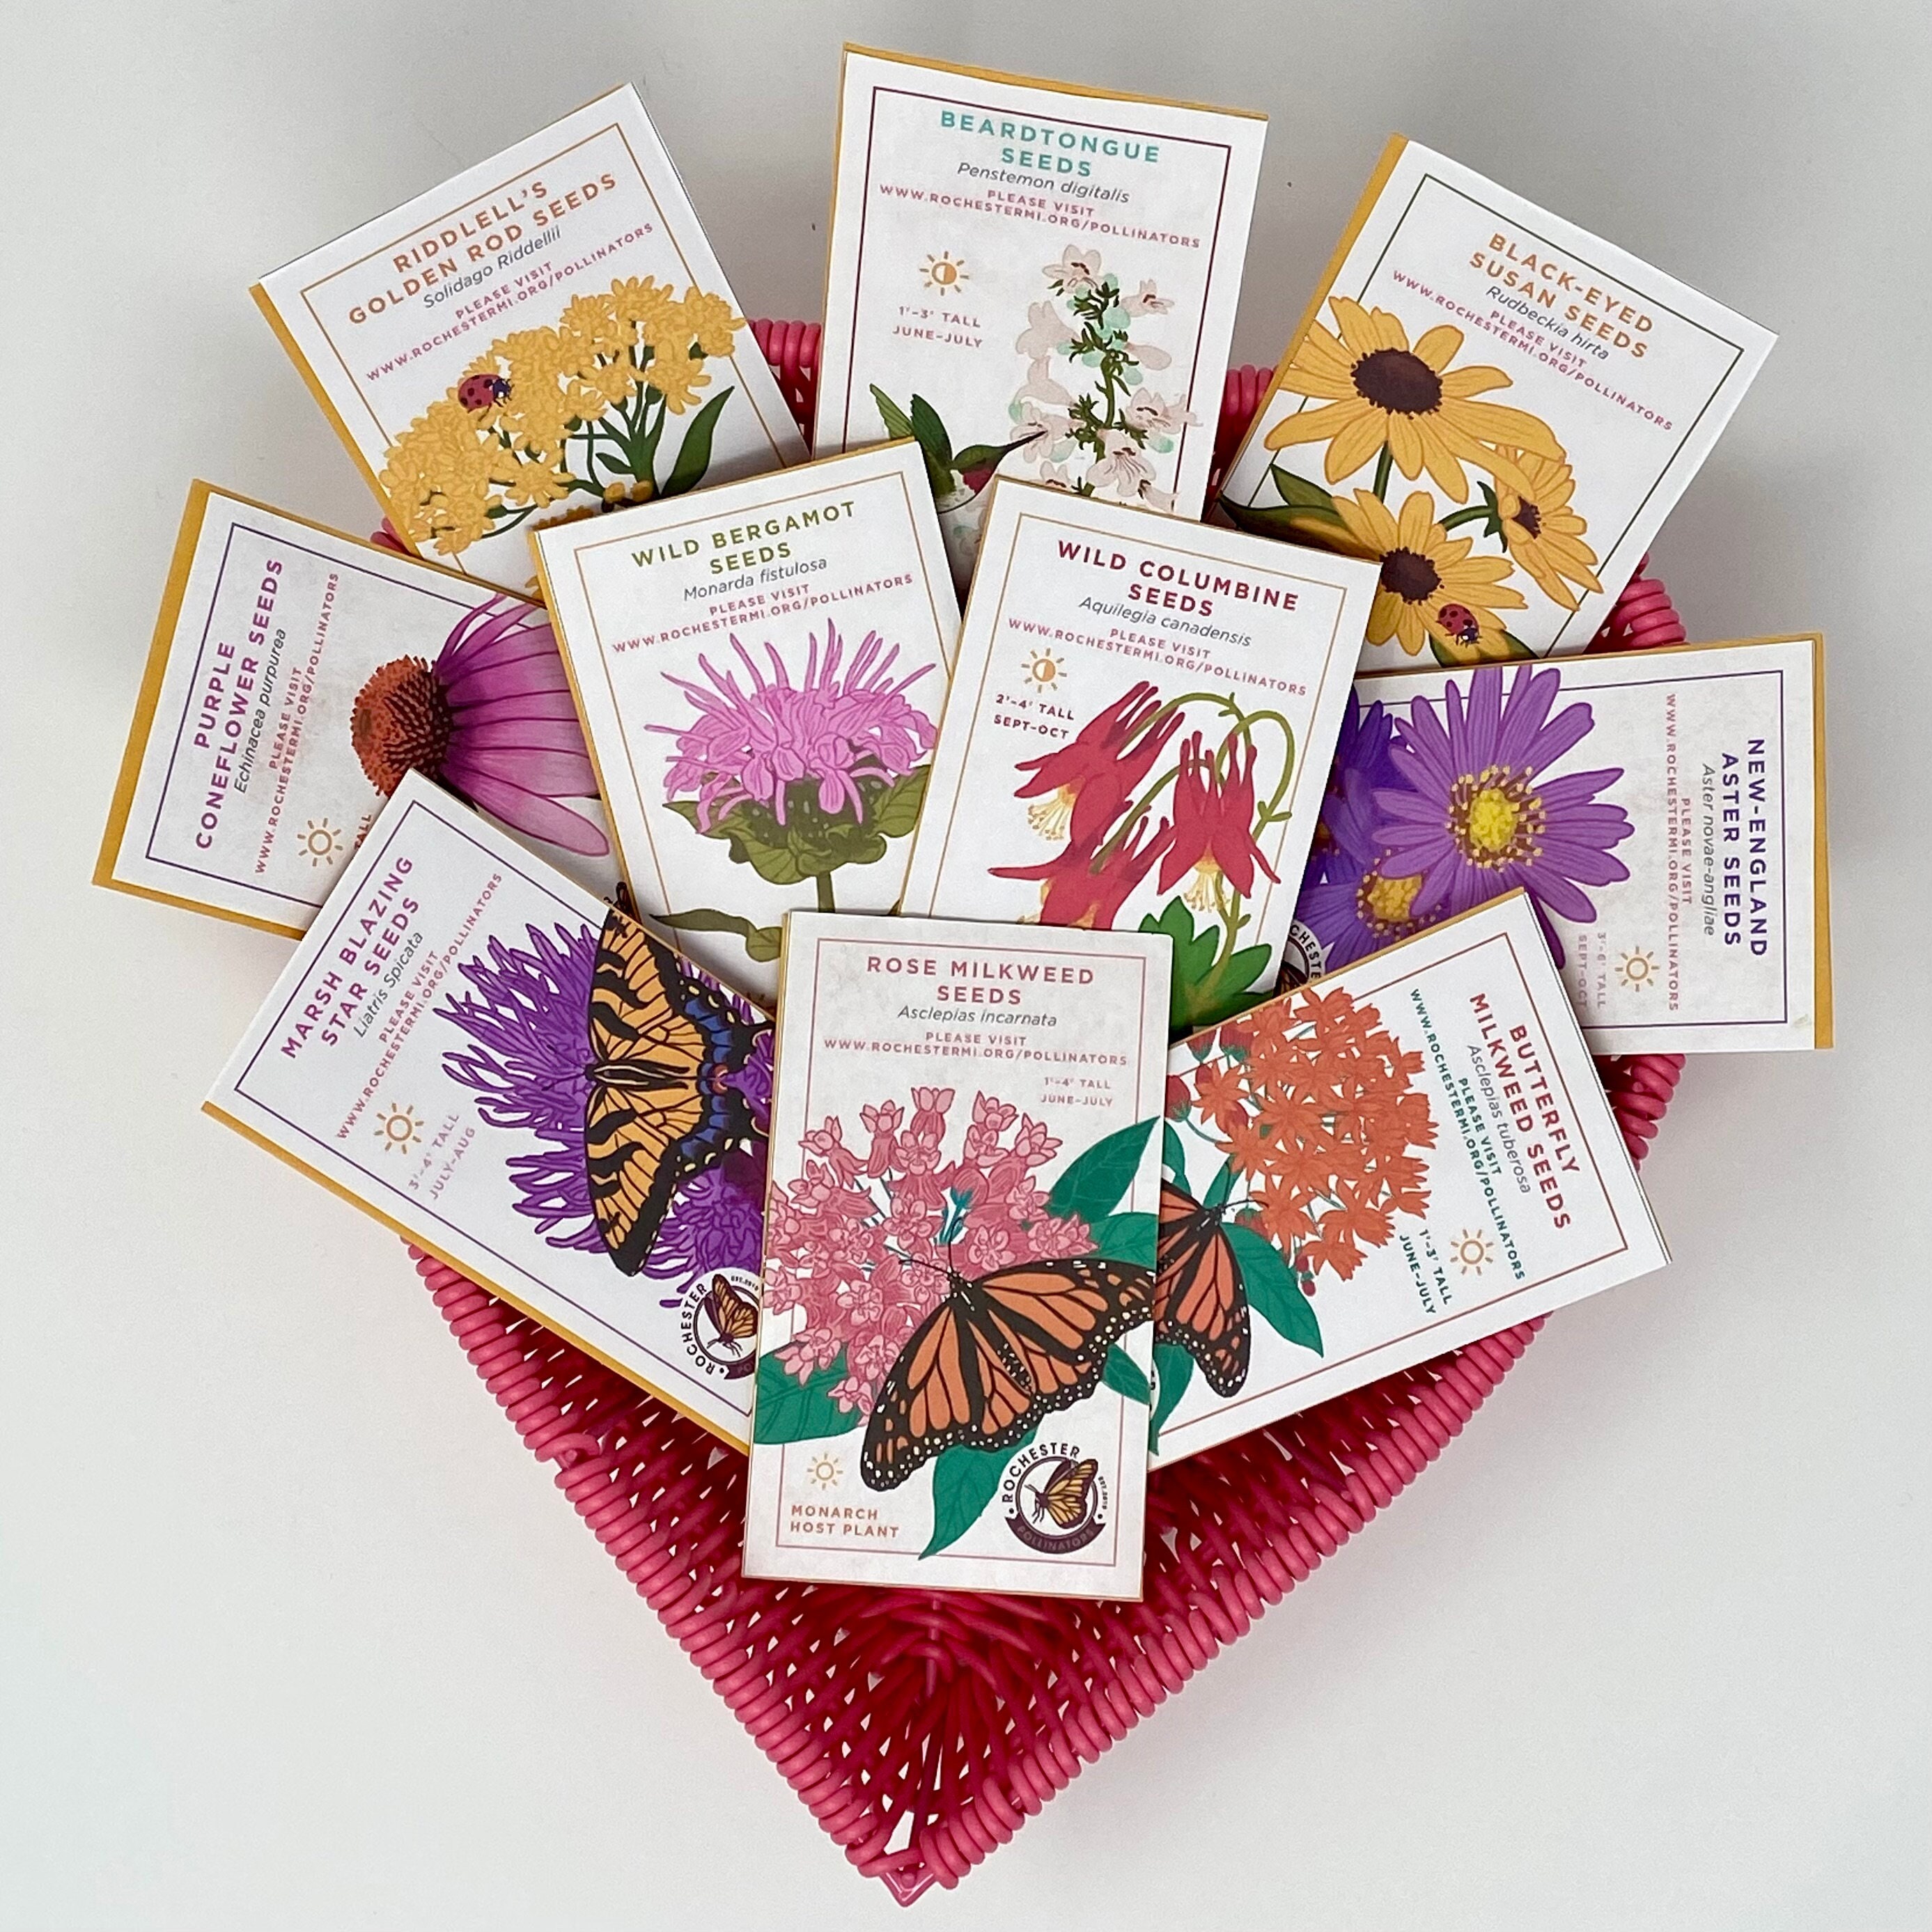 Custom Seed Packets - Pollination Celebration - Pollinator Wildflower Mix